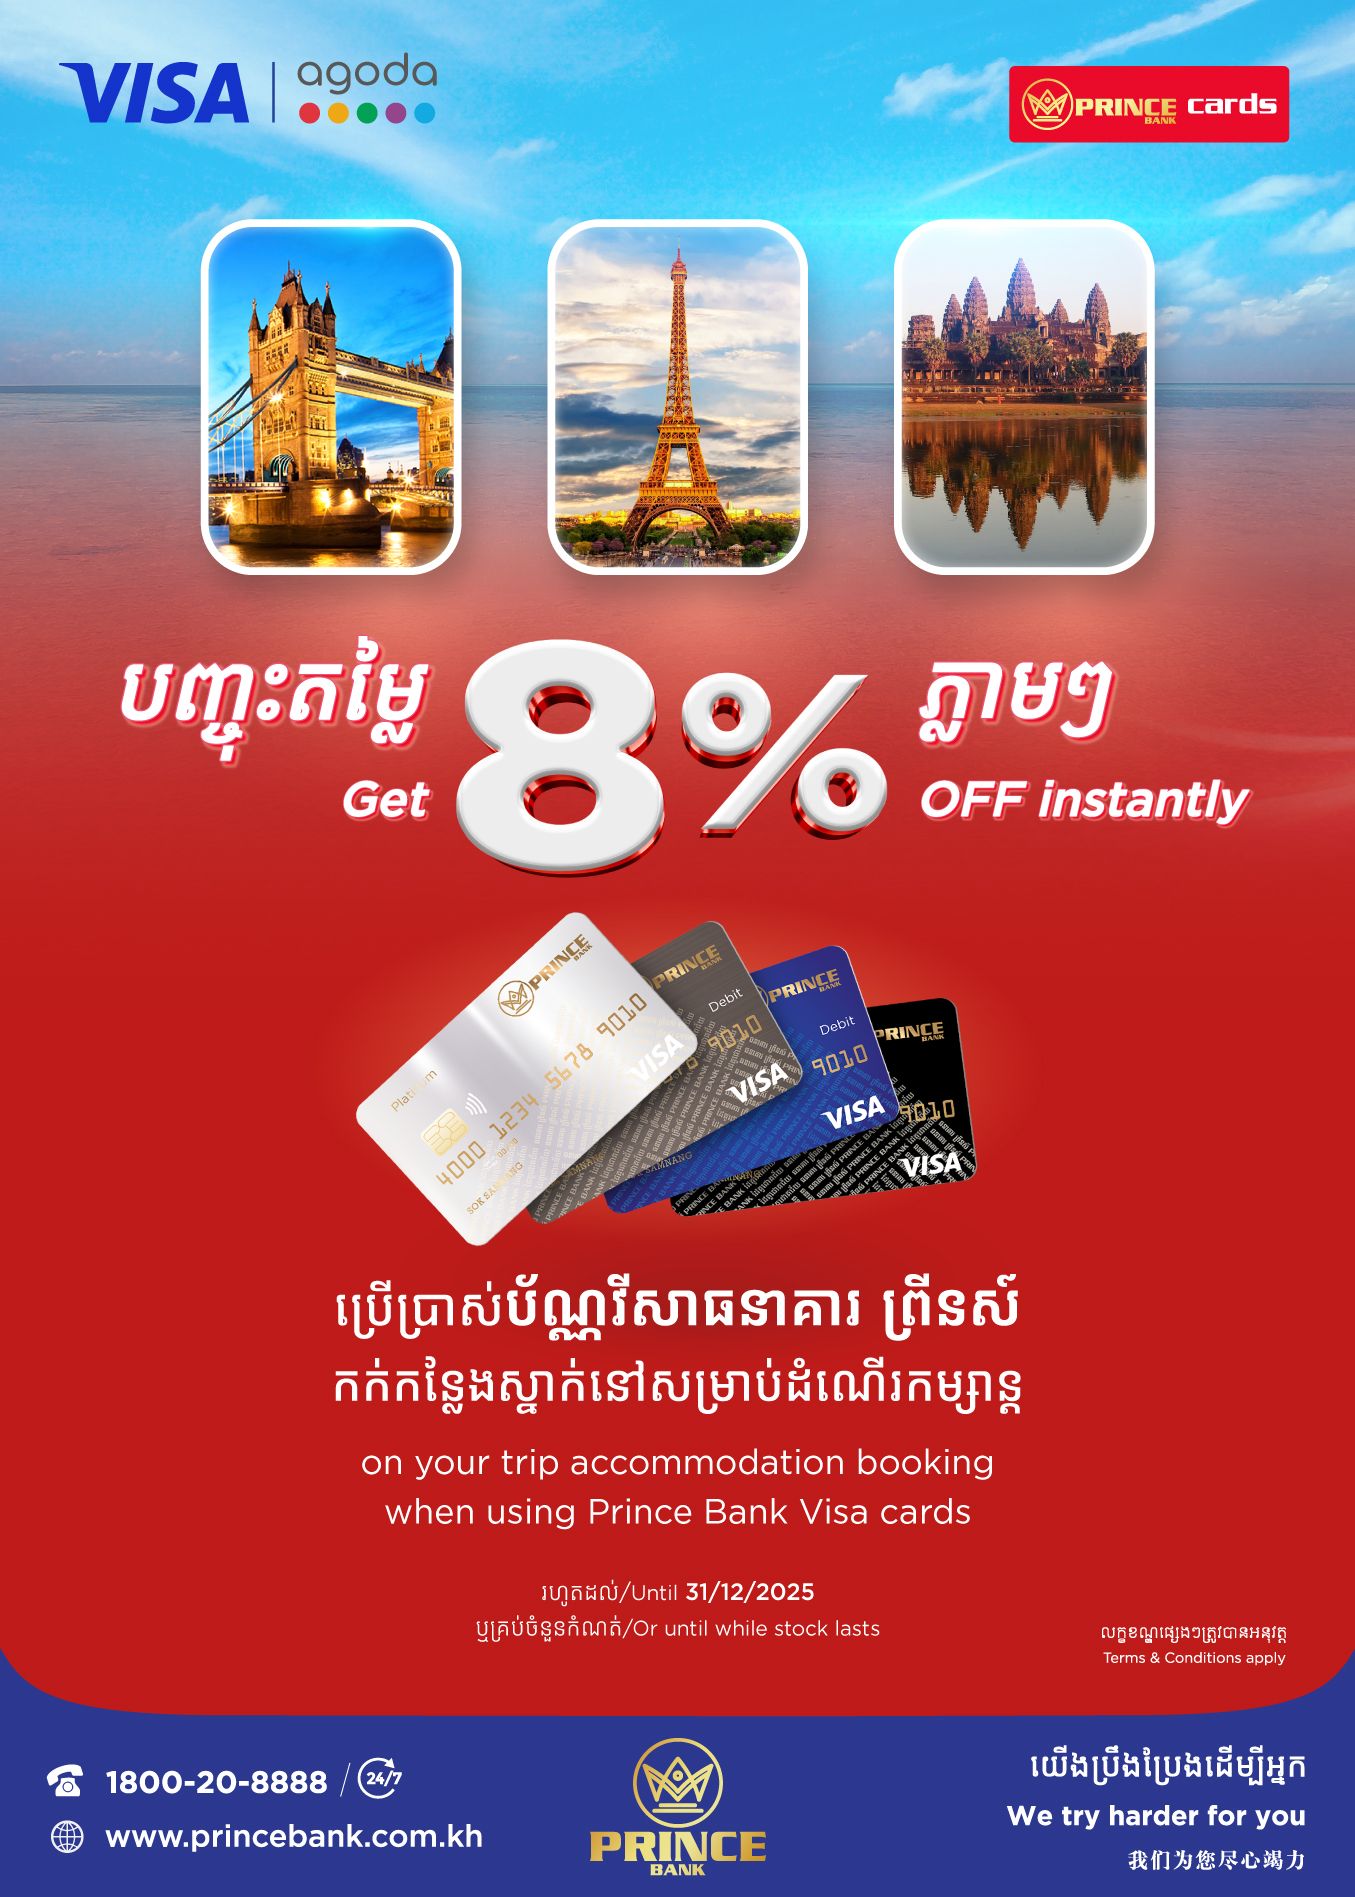 Special Offer for Prince Bank Visa Cardholders on 